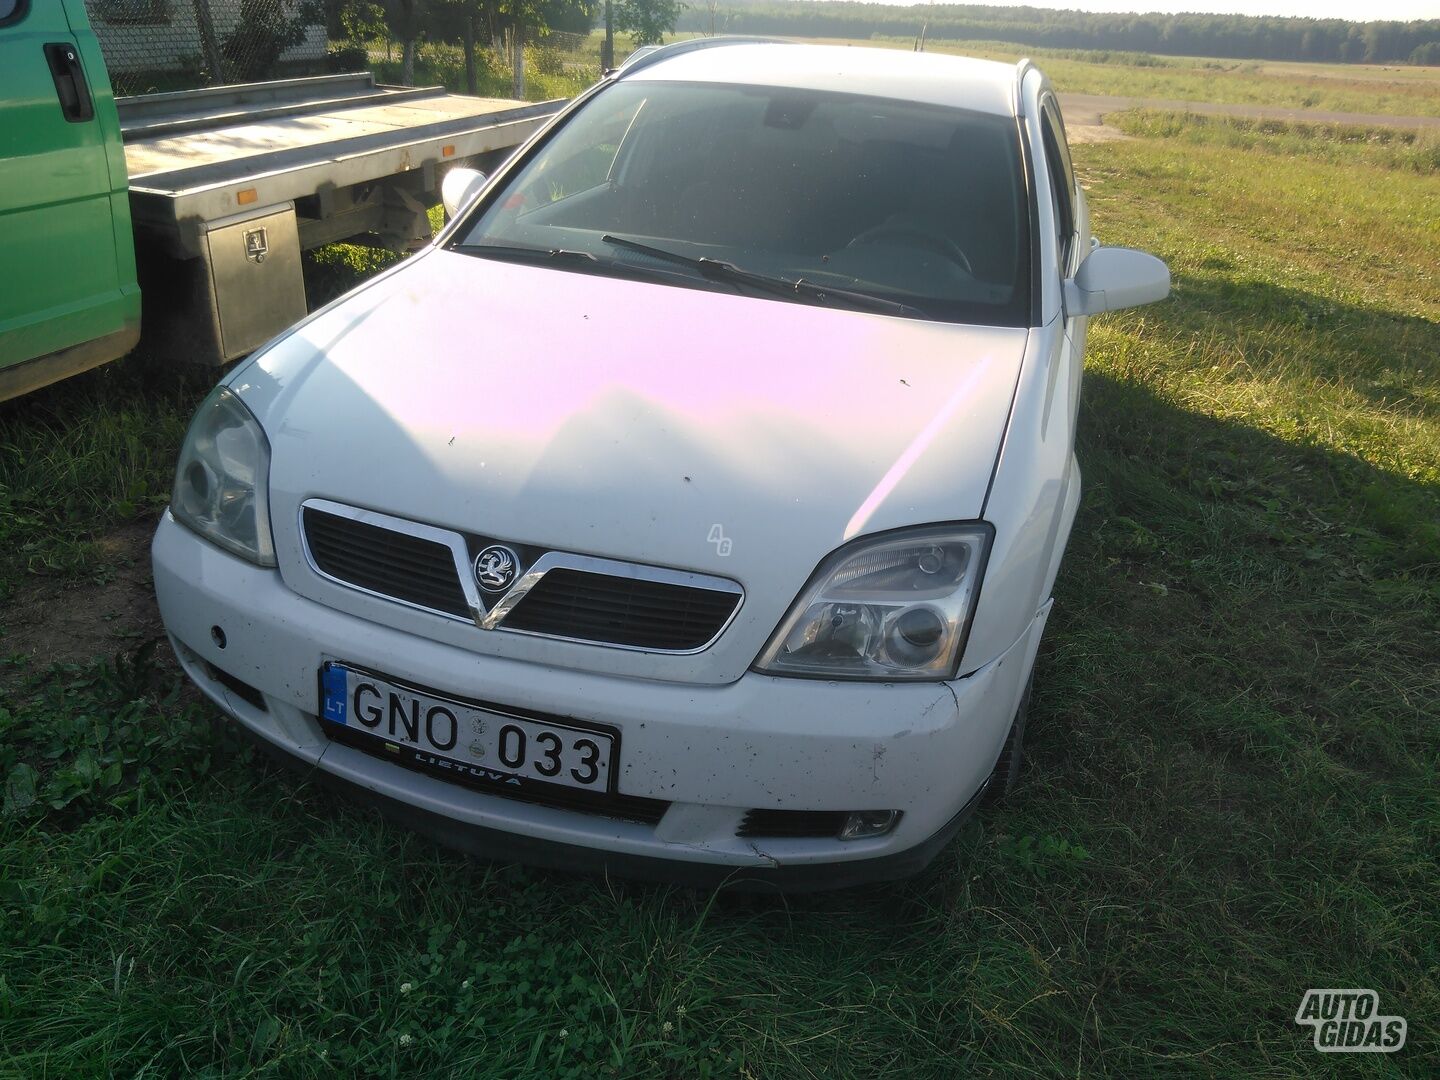 Opel Vectra 2004 г запчясти